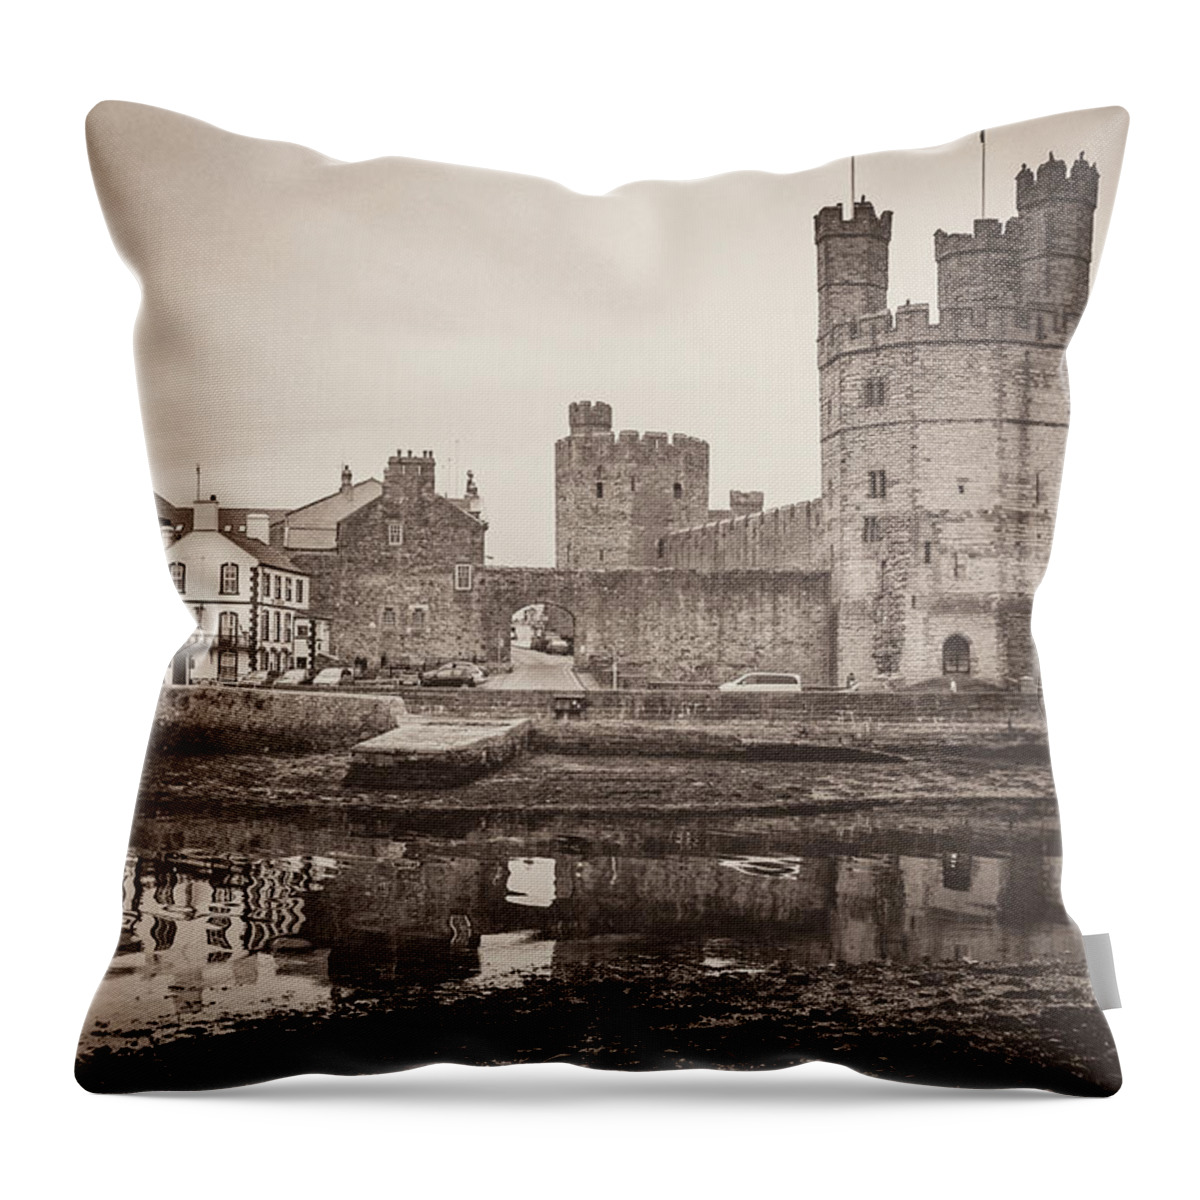 Caernarfon Castle Throw Pillow featuring the photograph Caernarfon Castle by Rob Hemphill